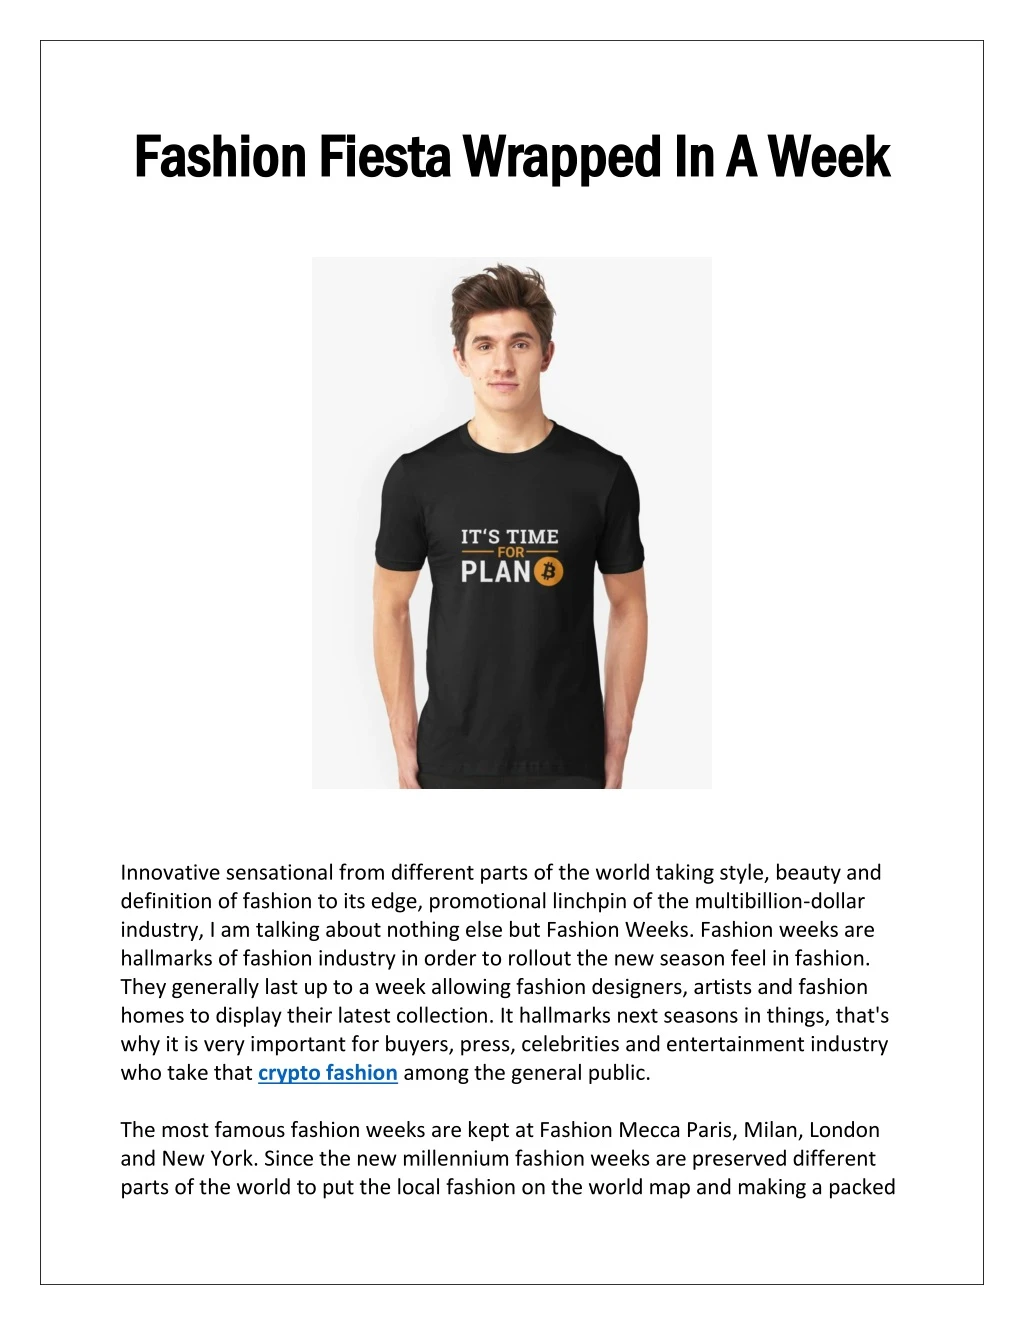 fashi fashion fies on fiesta wrap